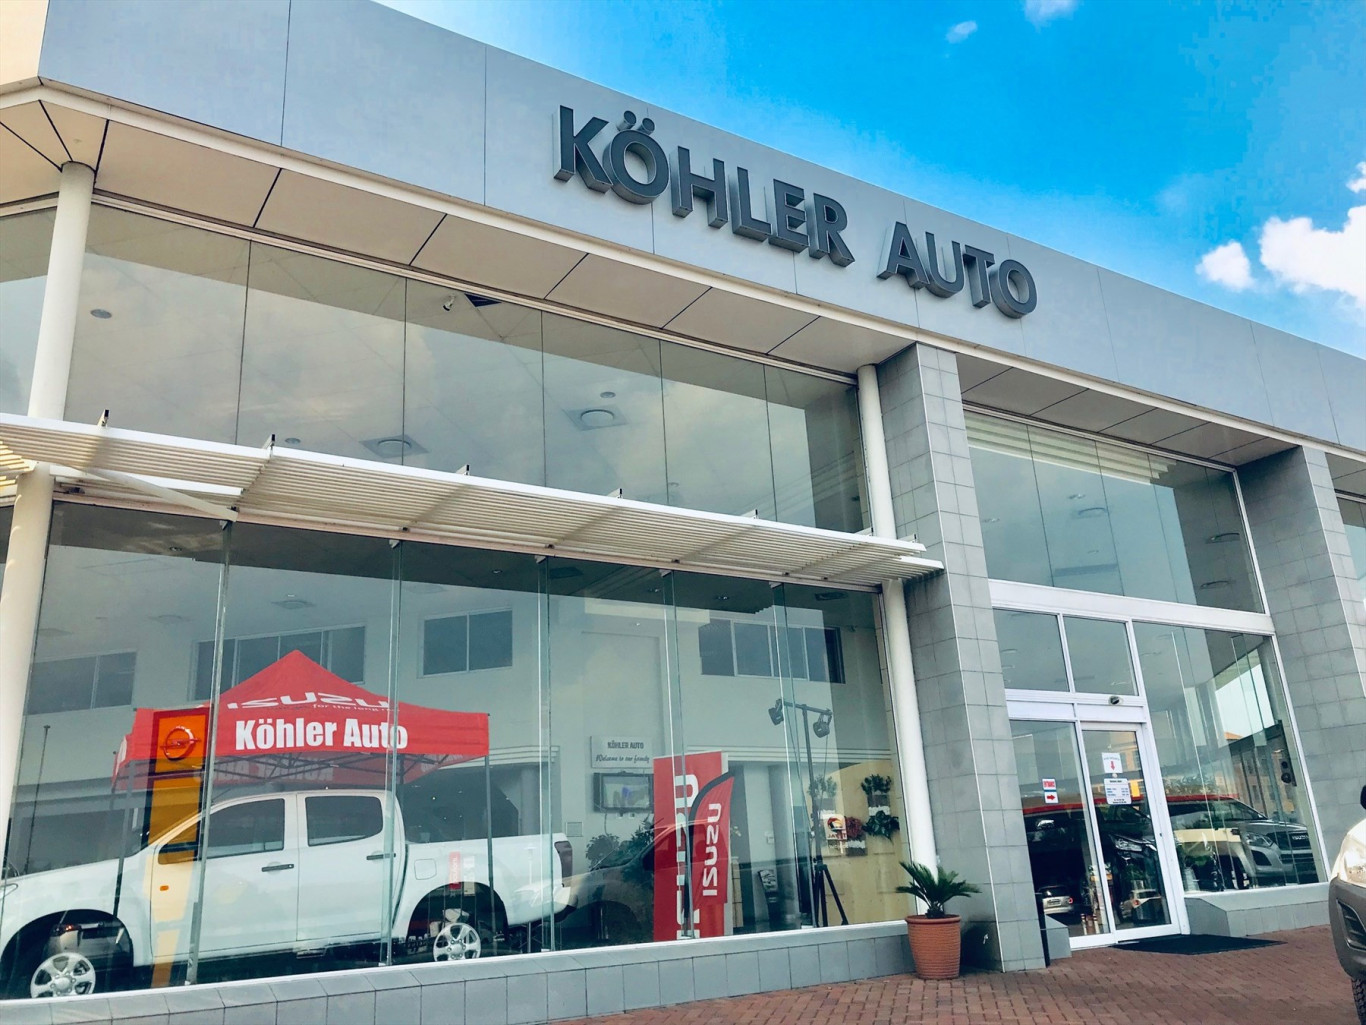 Kohler Auto leading the way to true transformation